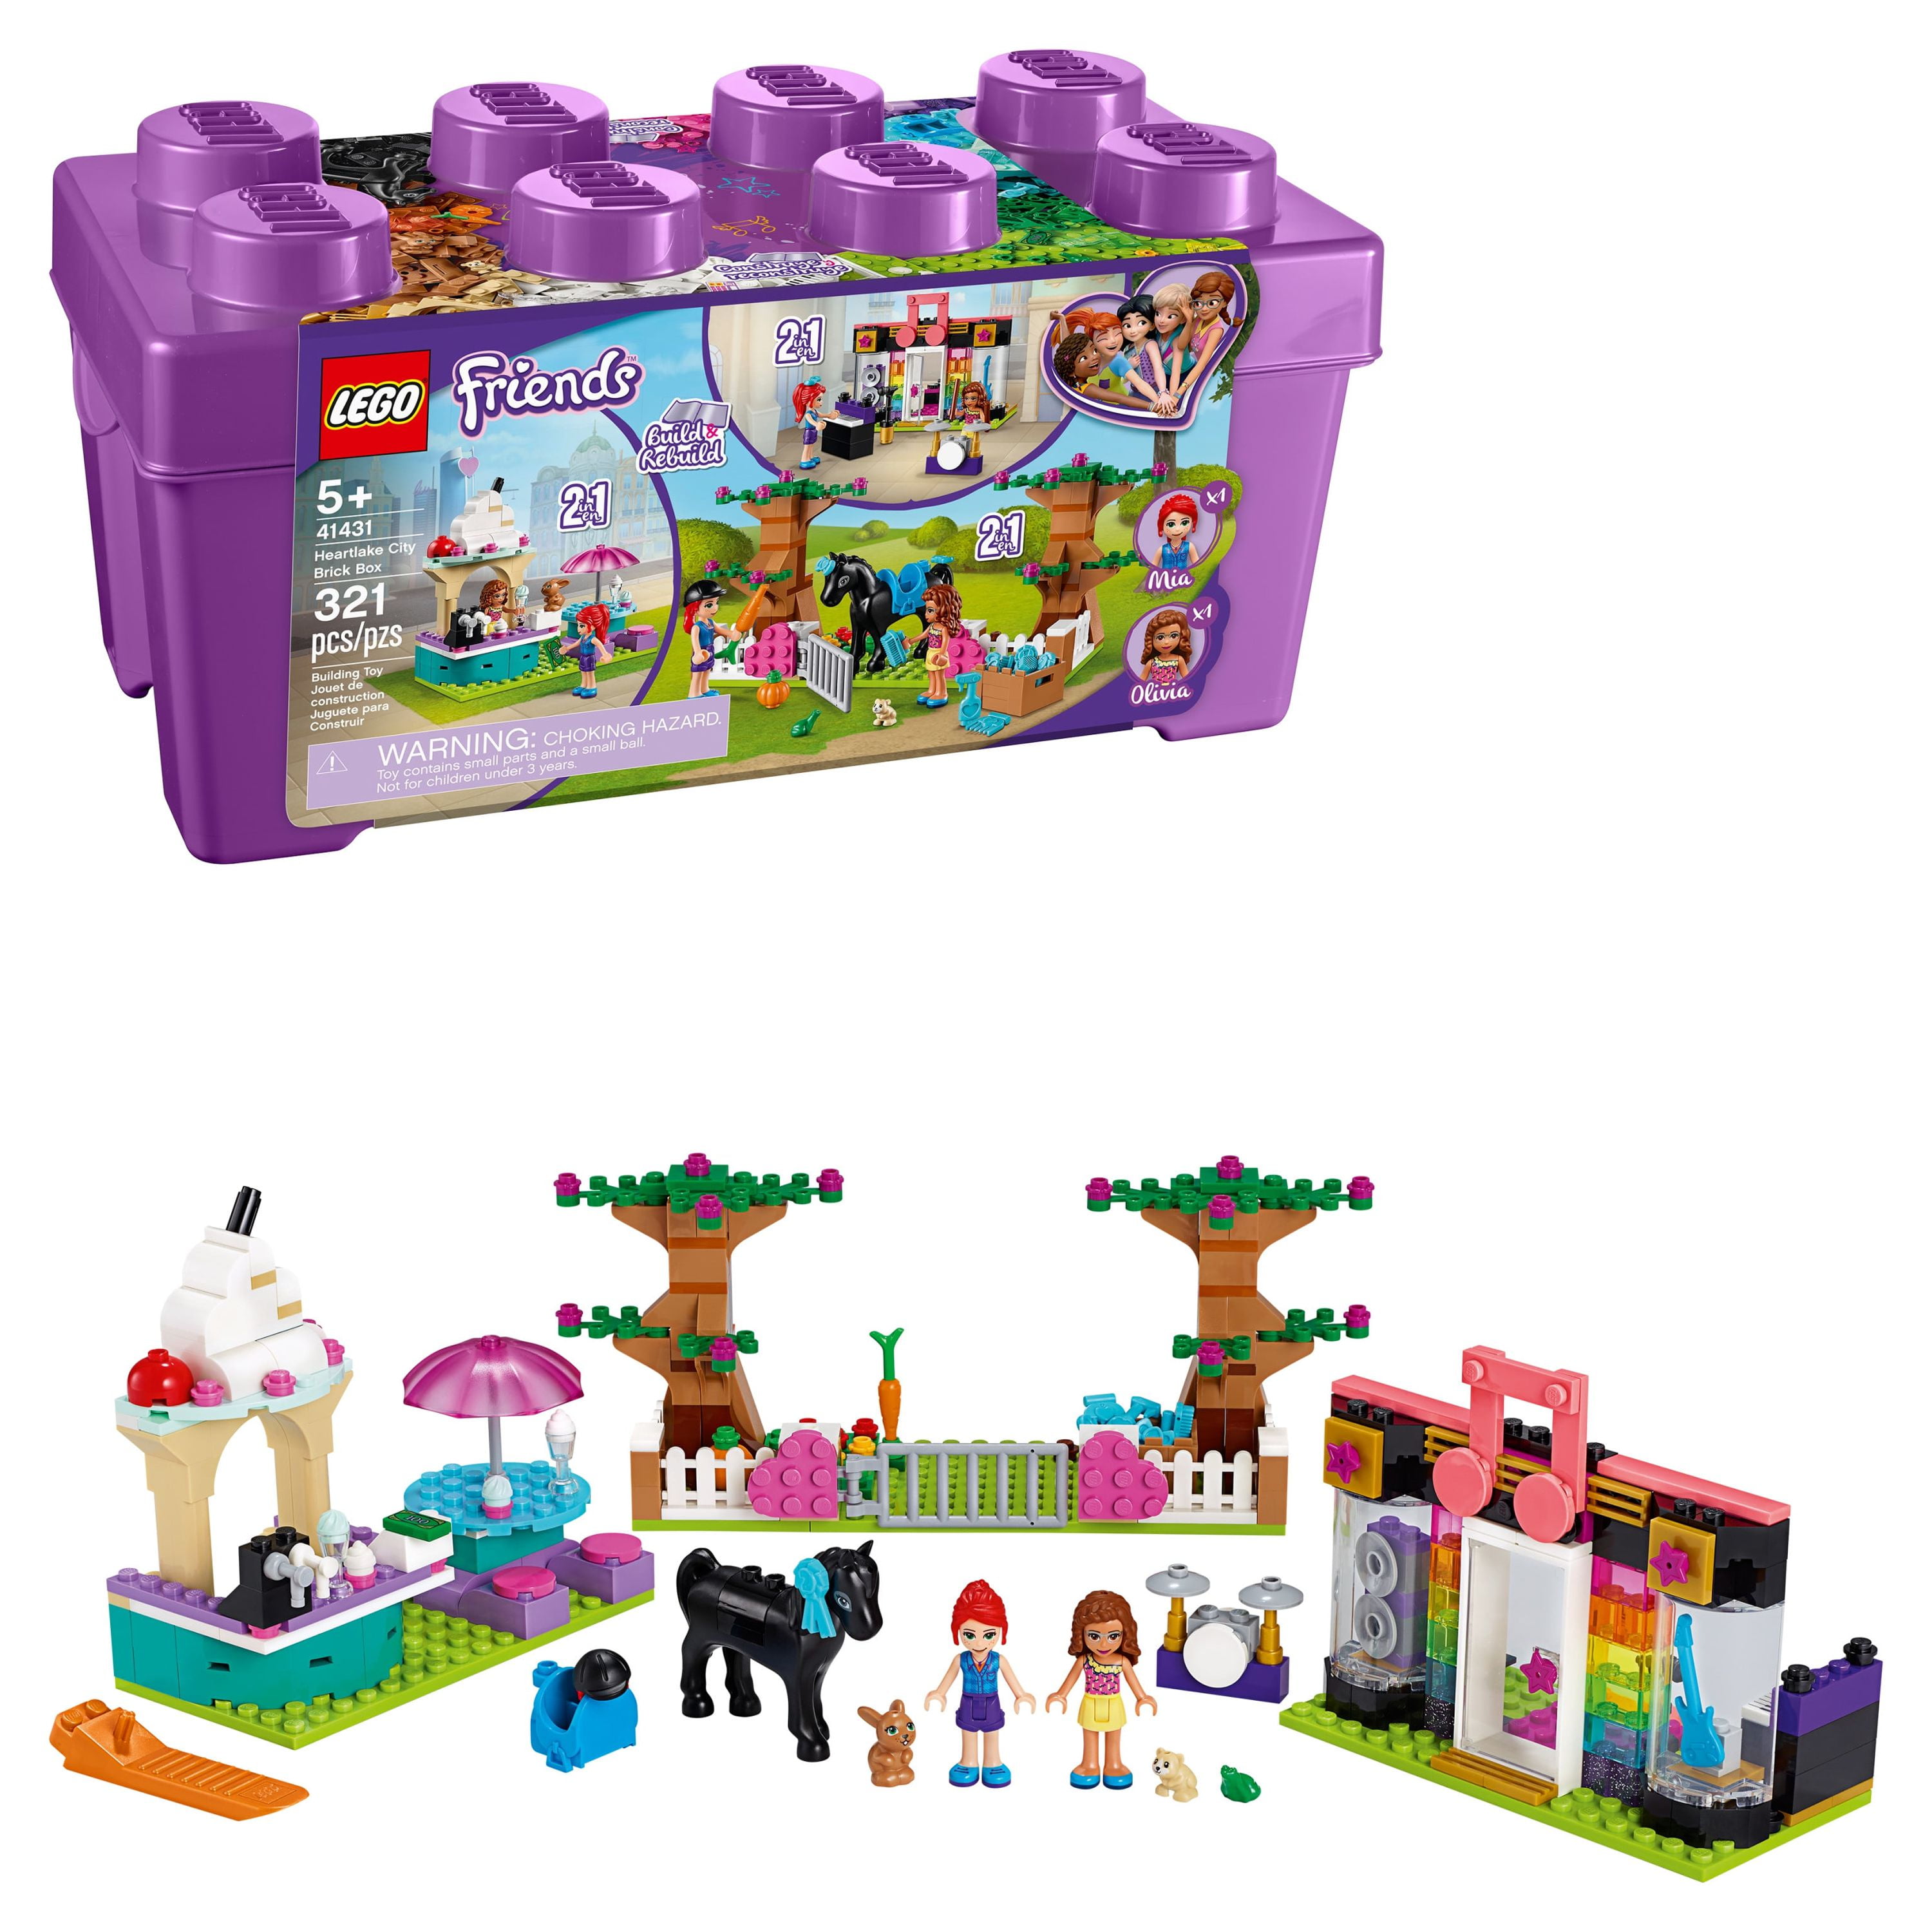 LEGO Friends Heartlake City Brick Box 41431 Building Kit; Make 6 Scenes  from 1 Box Set for Creative Fun (321 Pieces)